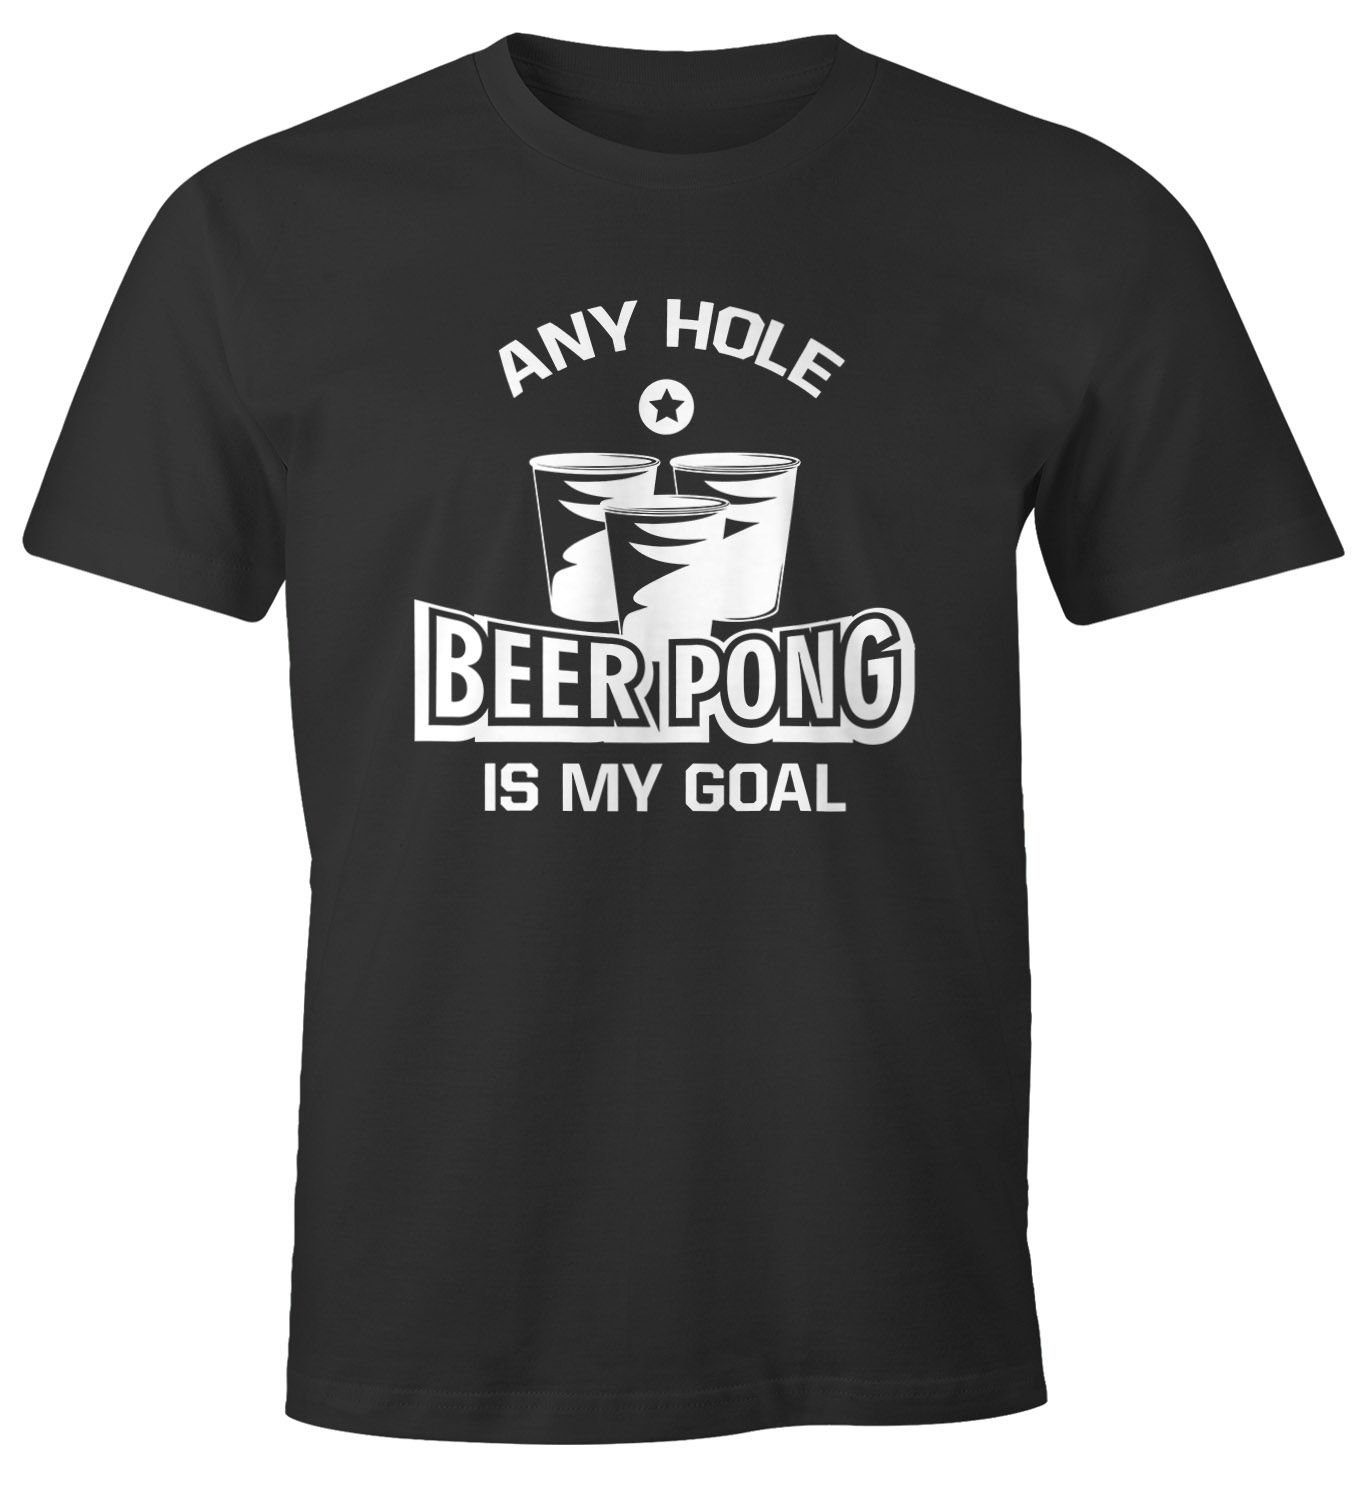 MoonWorks Print-Shirt Herren T-Shirt Beer Pong Any hole is my goal lustiges Trink Shirt Saufen Bier Party Moonworks® mit Print